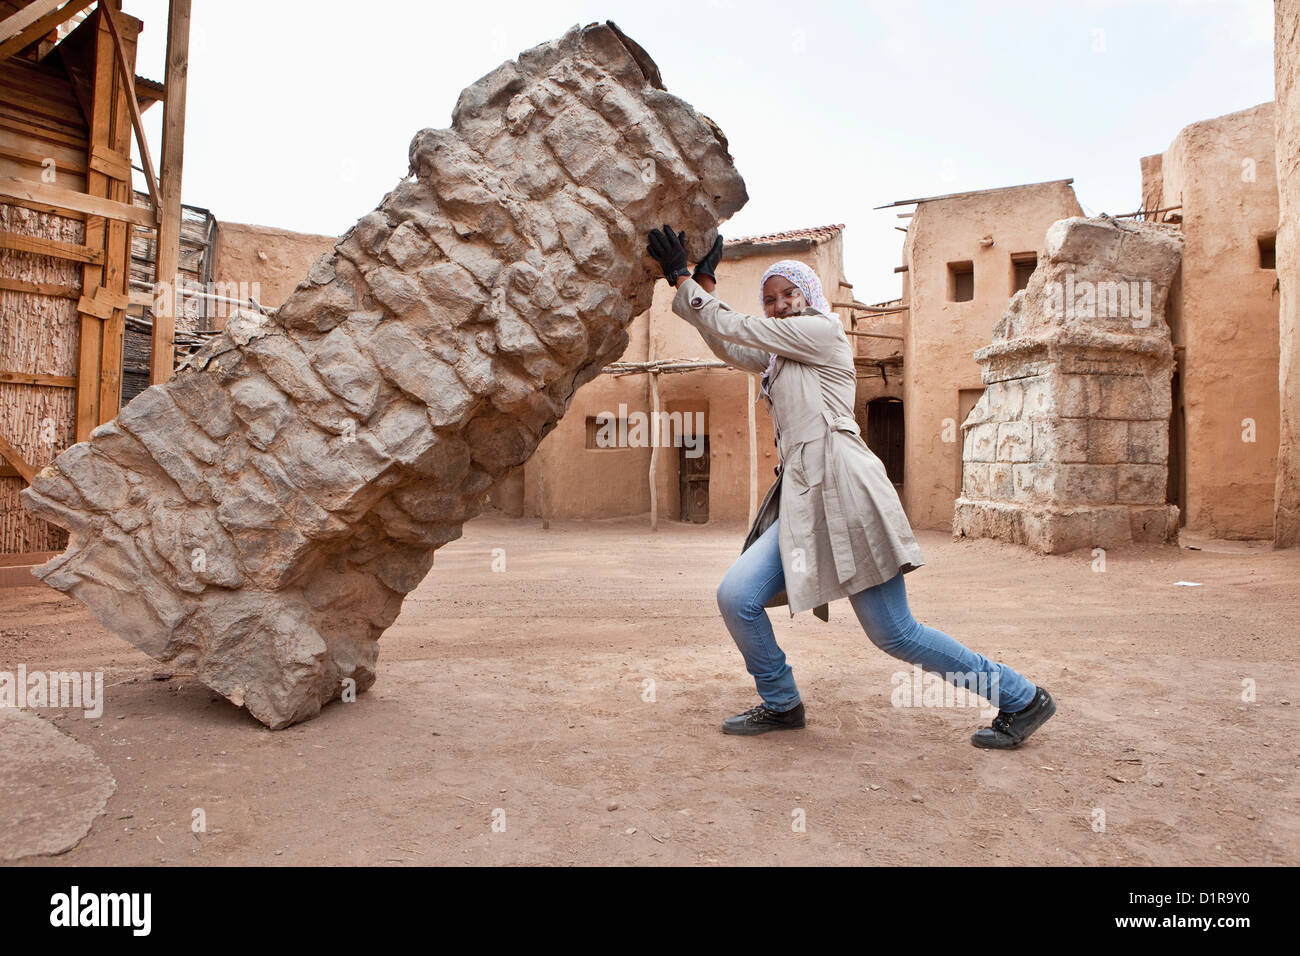 Morocco, near Ouarzazate, Local guide at Atlas Film Studios shows that bricks are not heavy. Stock Photo